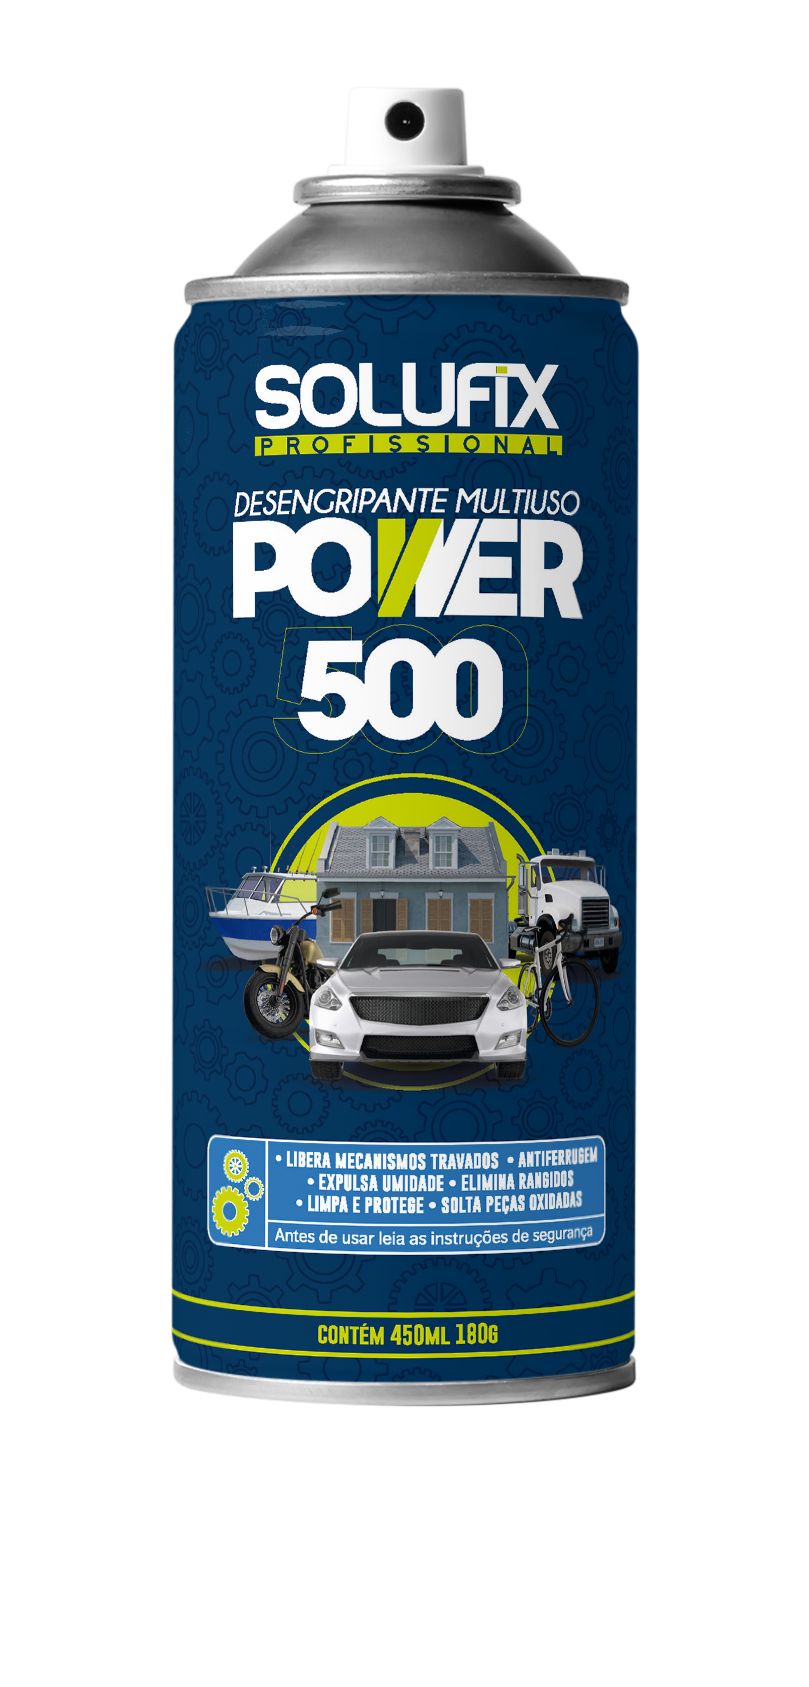 Power 500